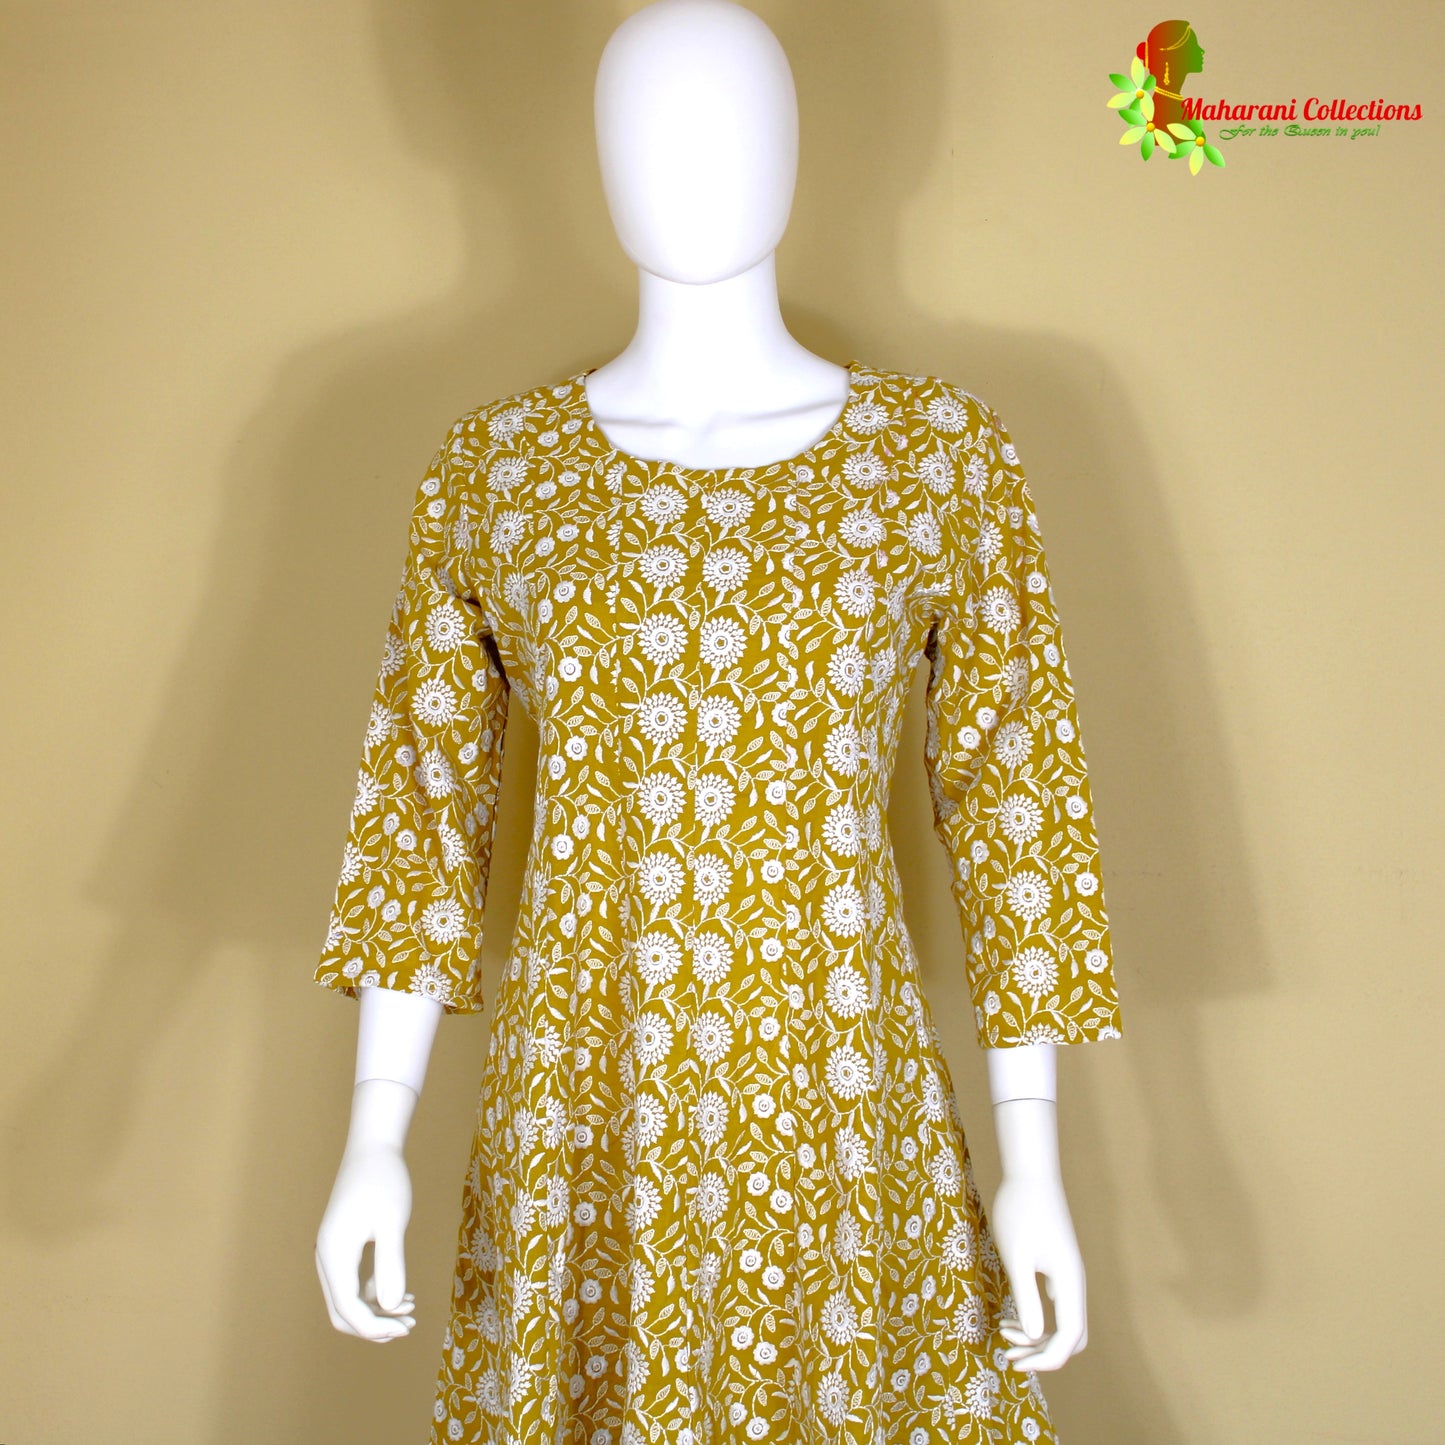 Maharani's Anarkali Suit - Mustard Yellow (L) - Pure Cotton